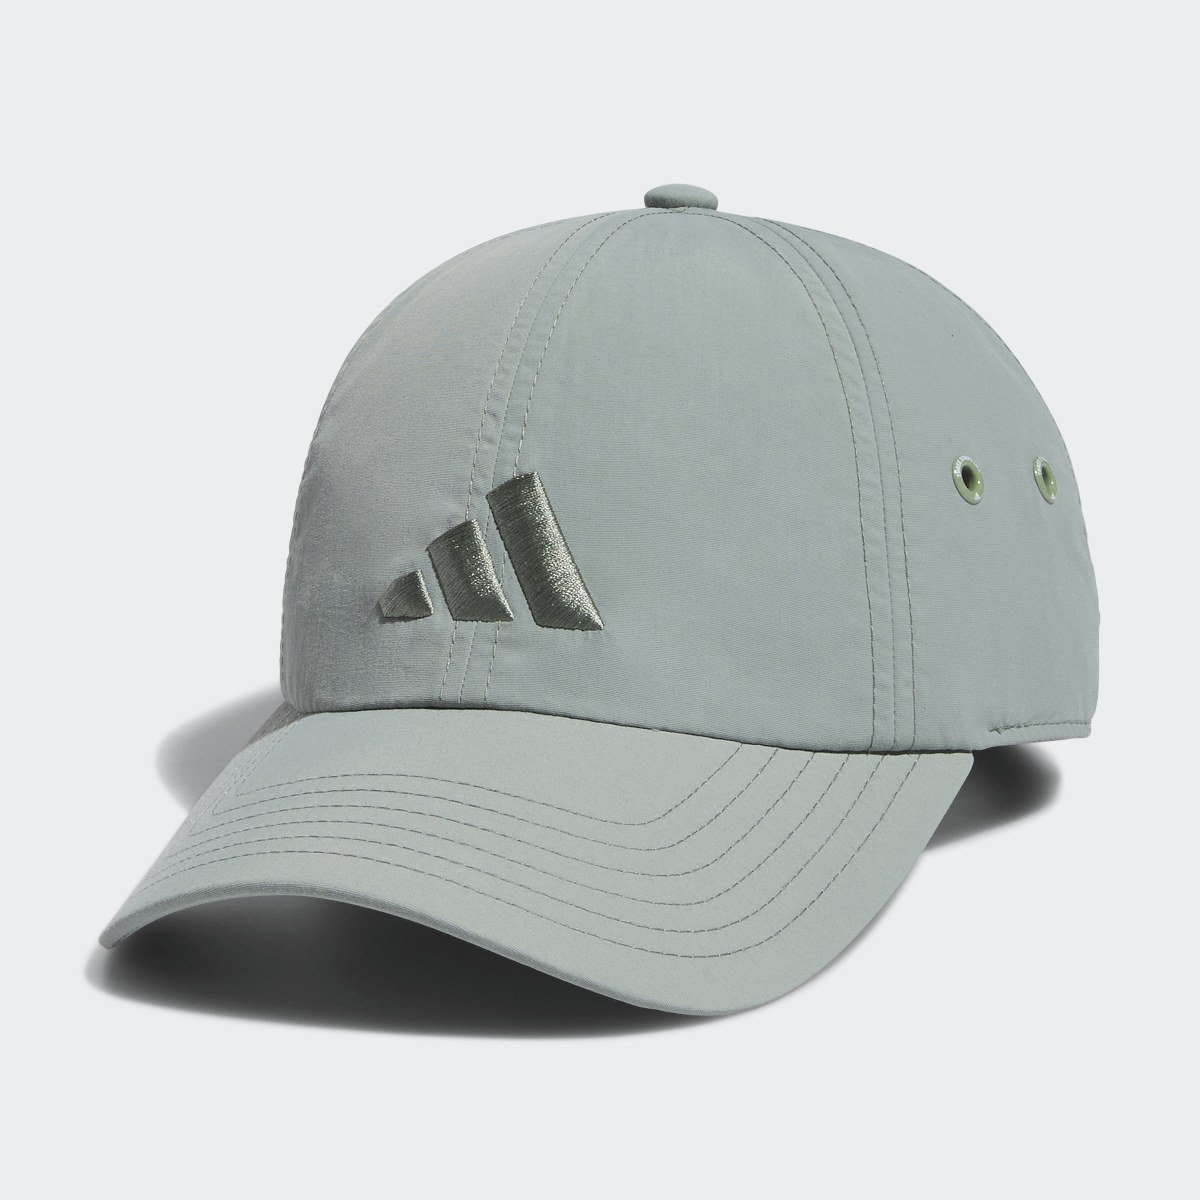 Adidas Influencer 3 Hat. 4